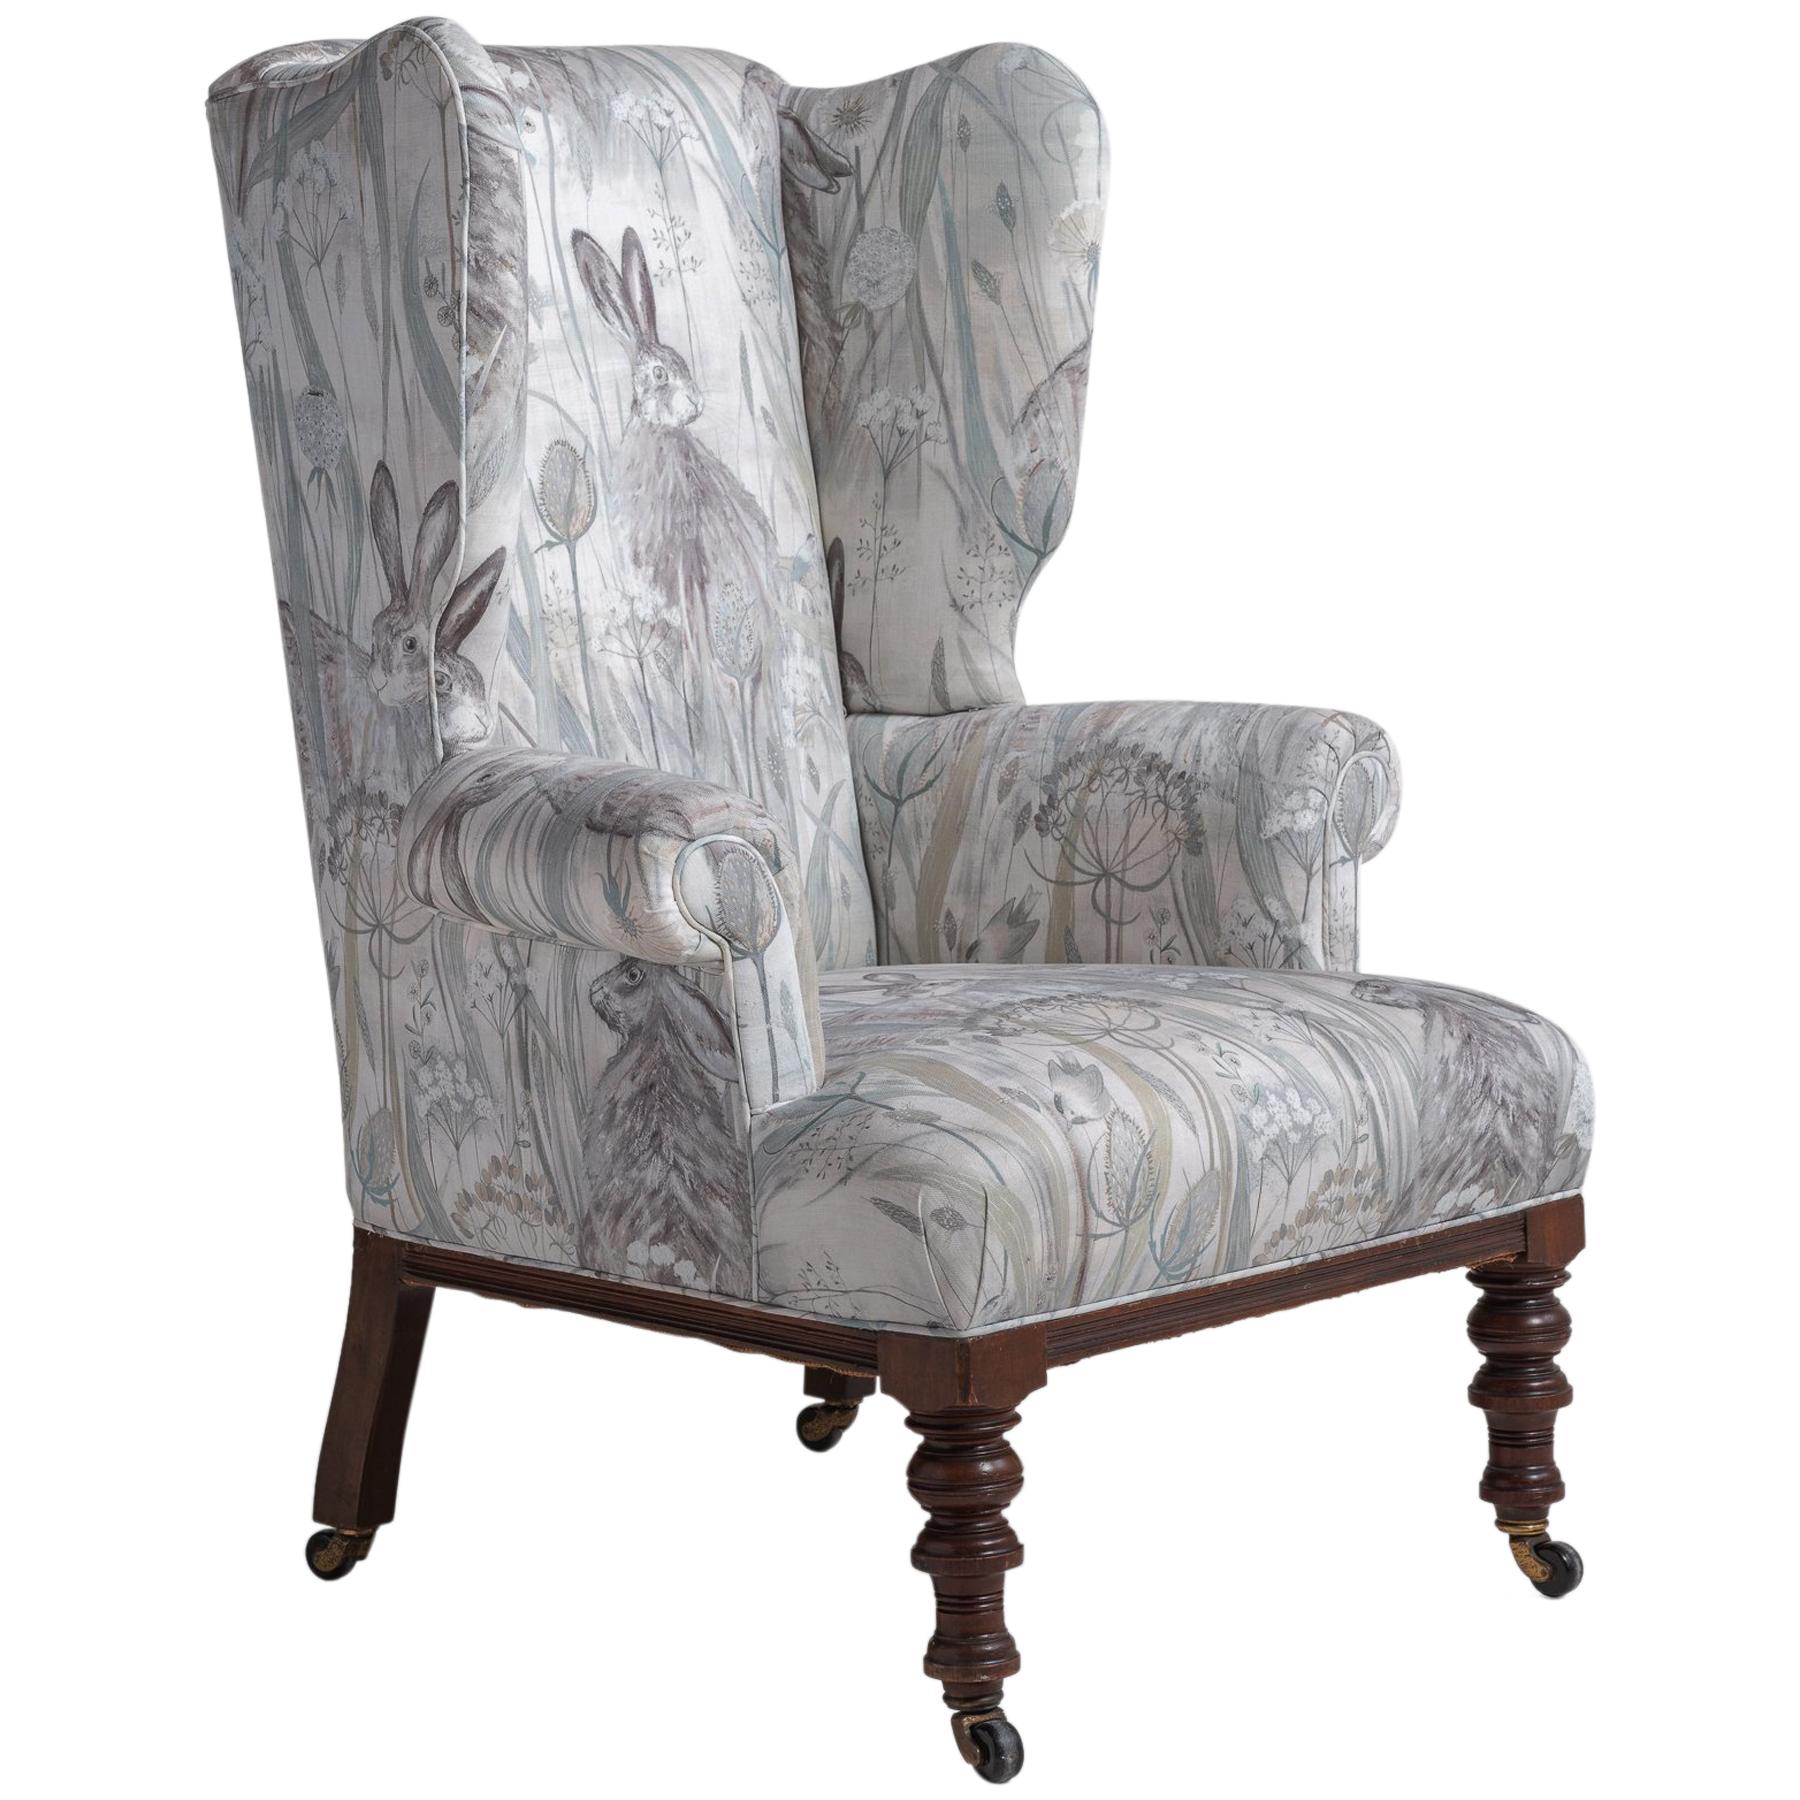 Victorian Wingback Chair, England, circa 1840